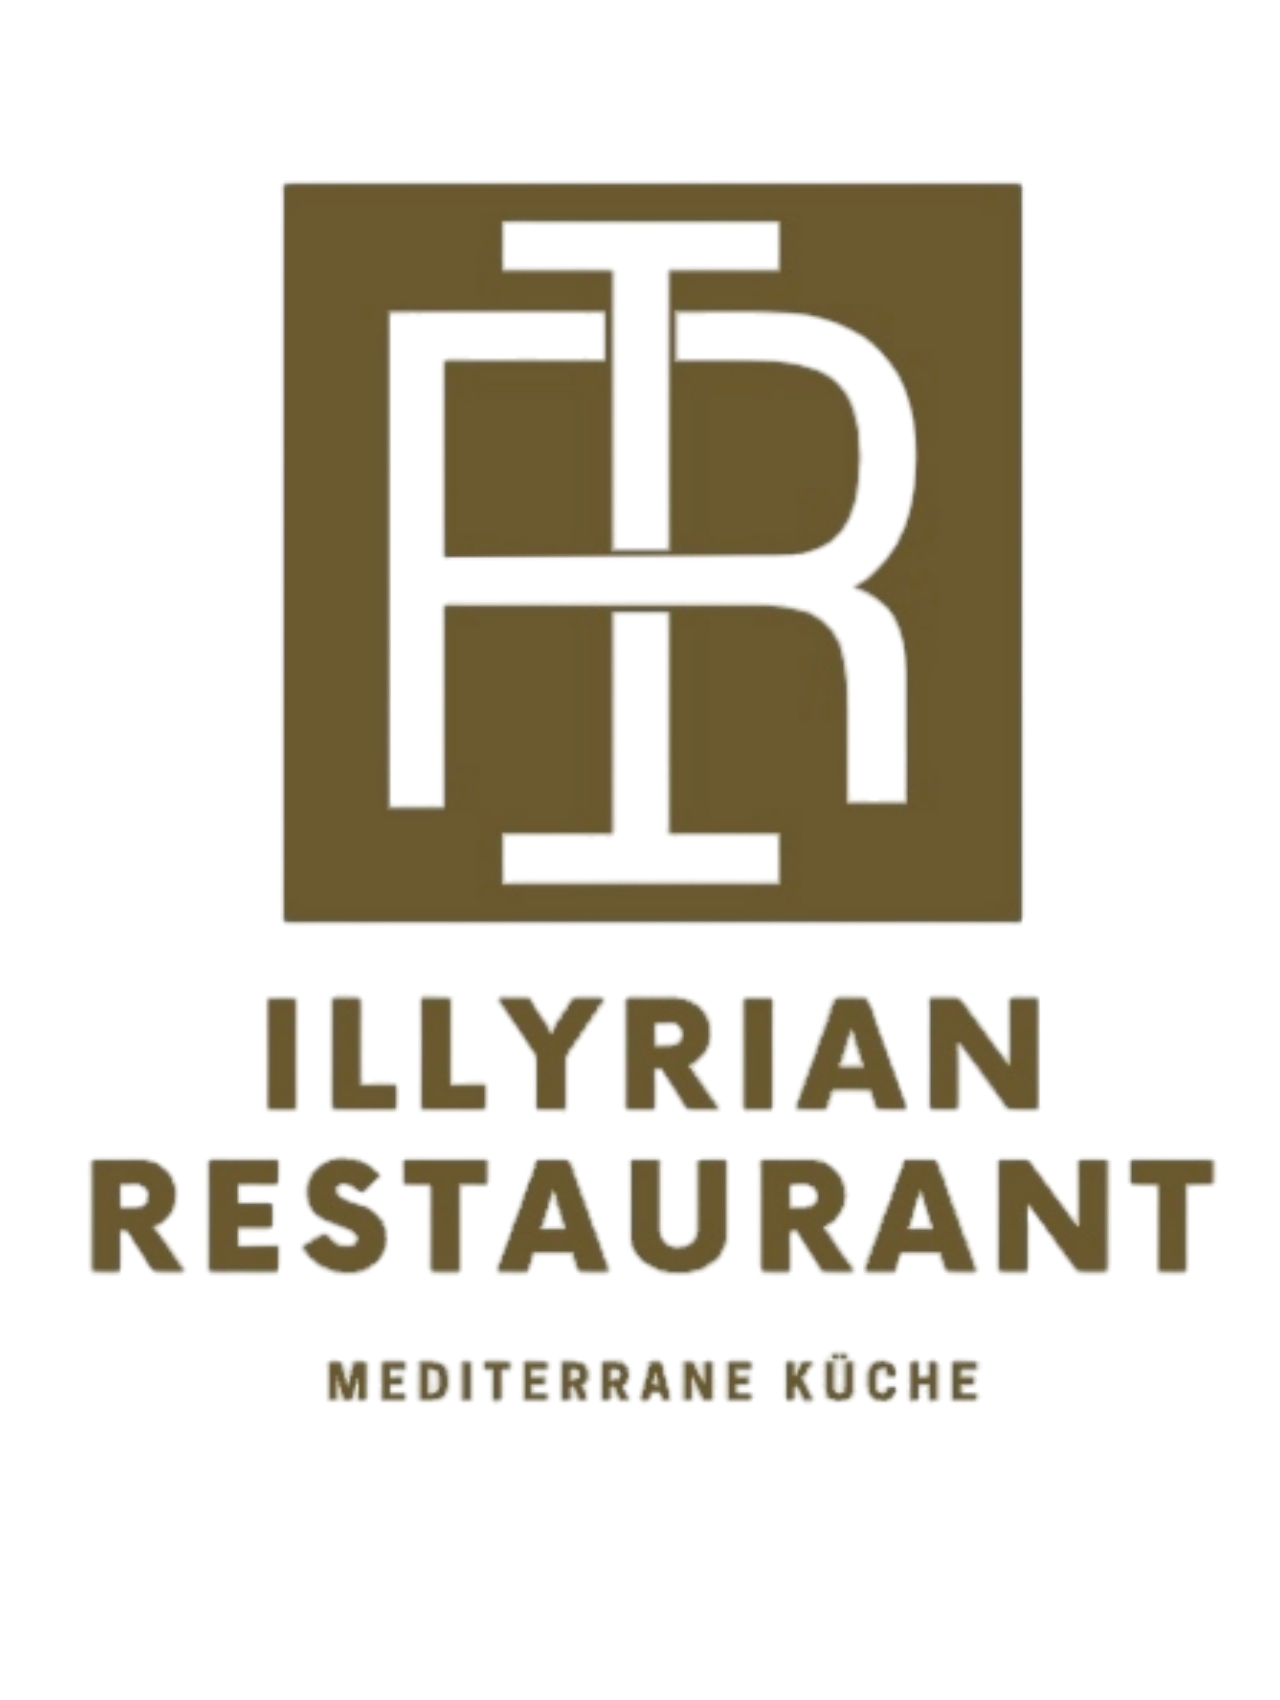 Illyrian.dessau's logo